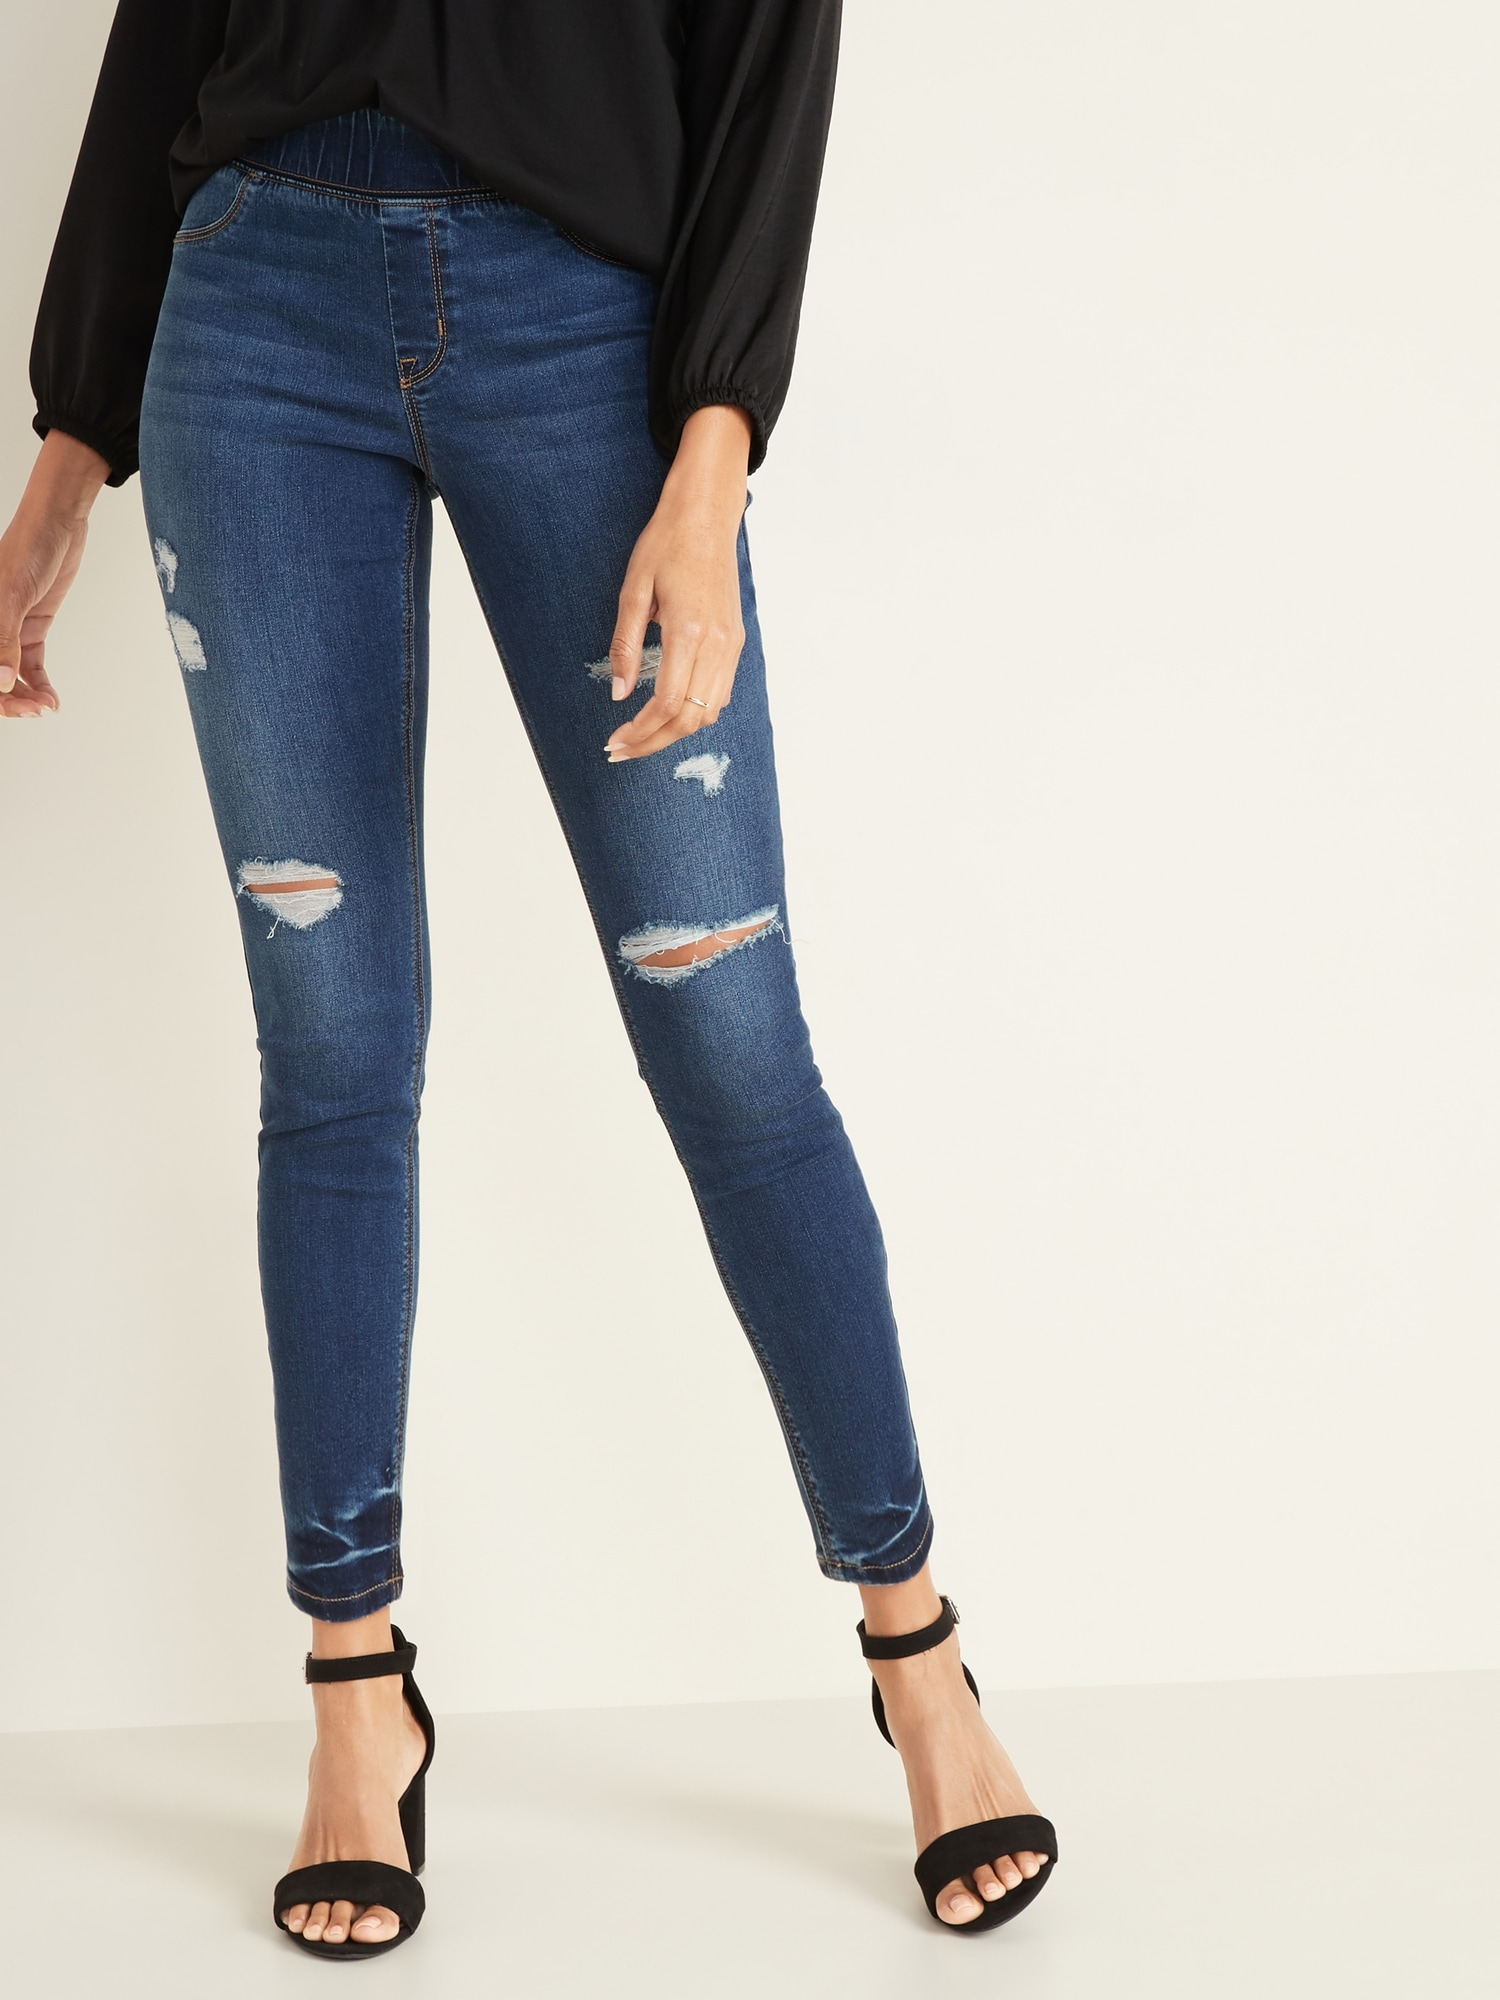 old navy elastic waist jeans